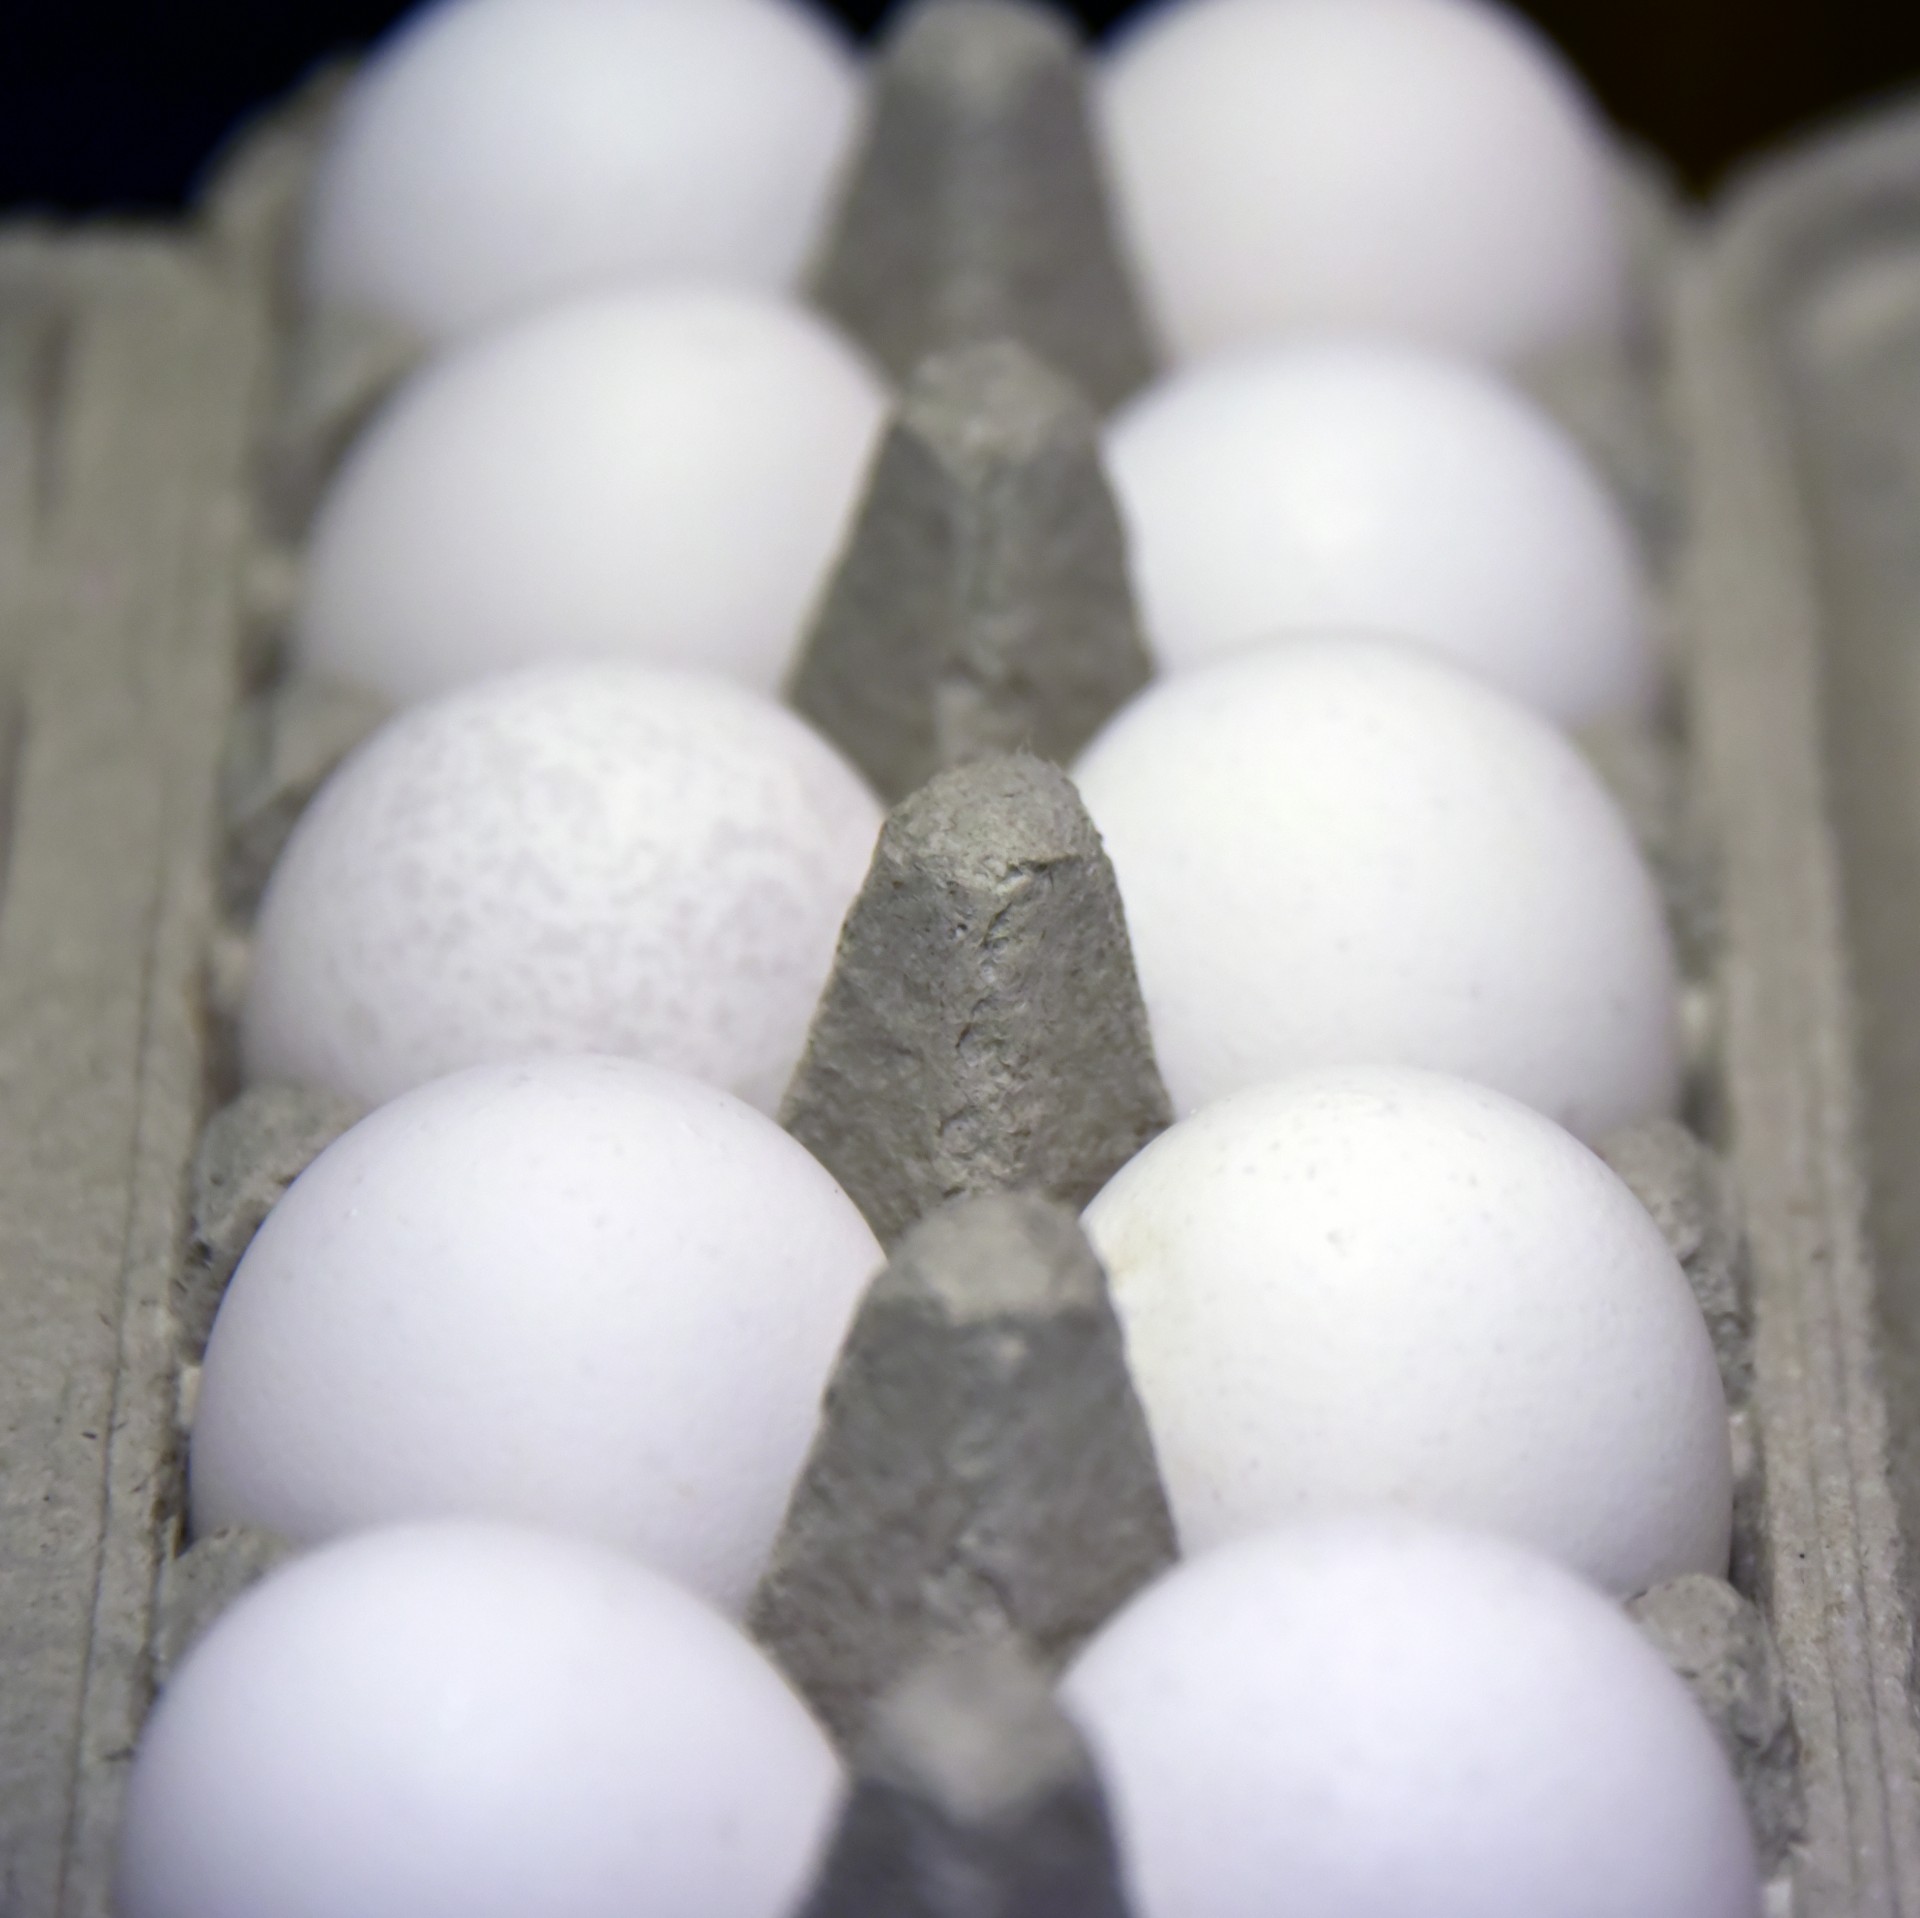 eggs carton grey free photo